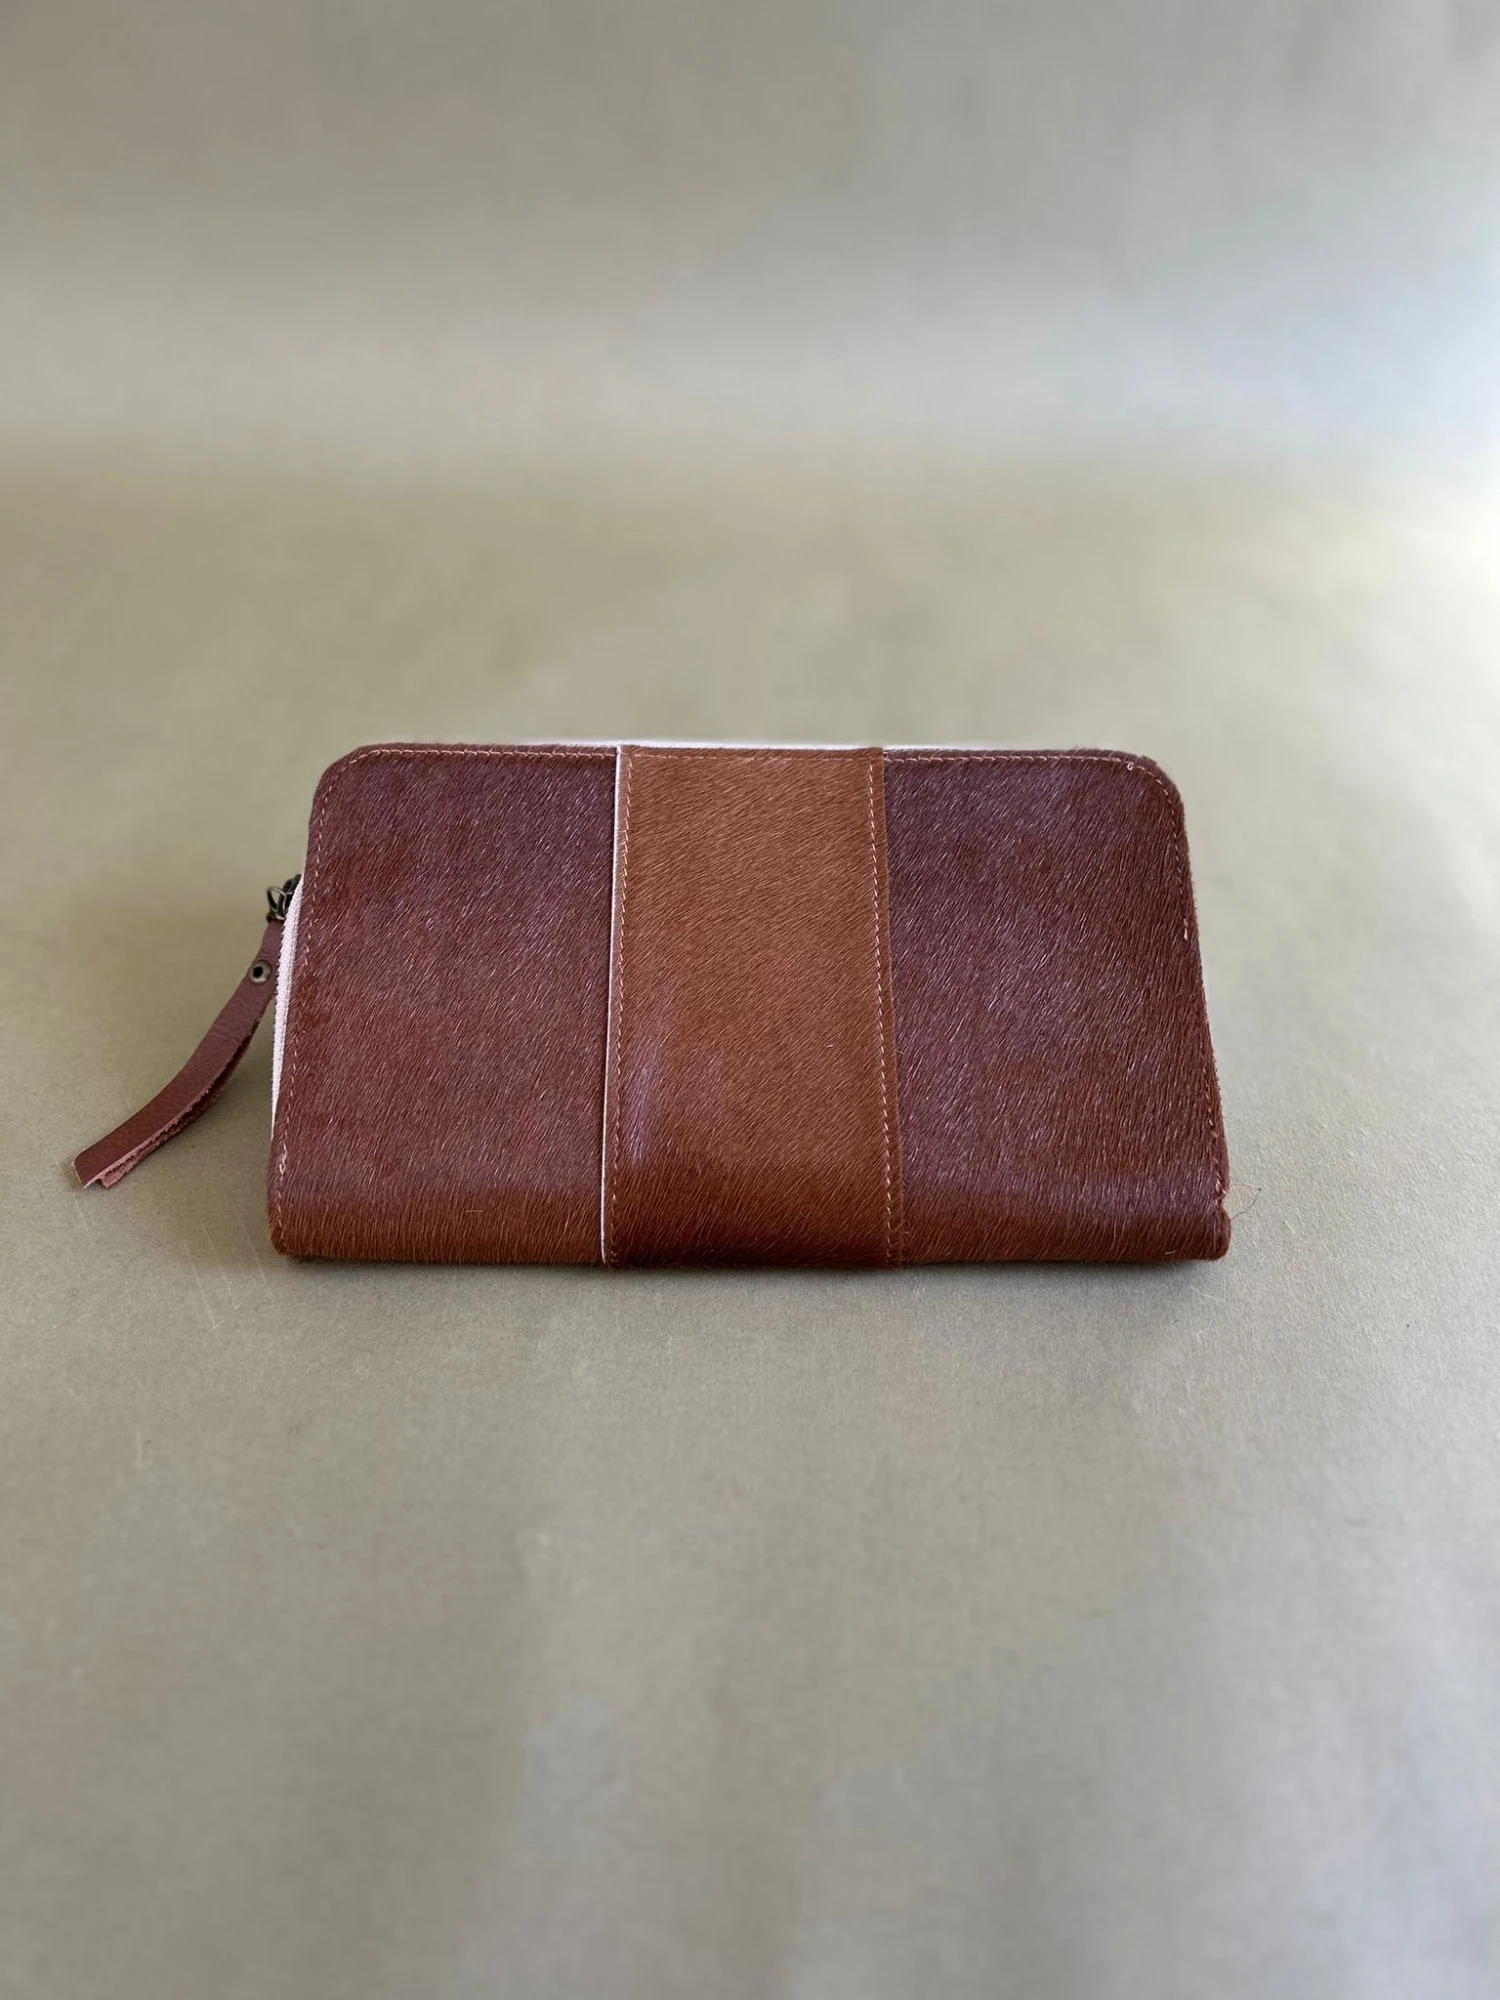 Leather Wallet marron n/a